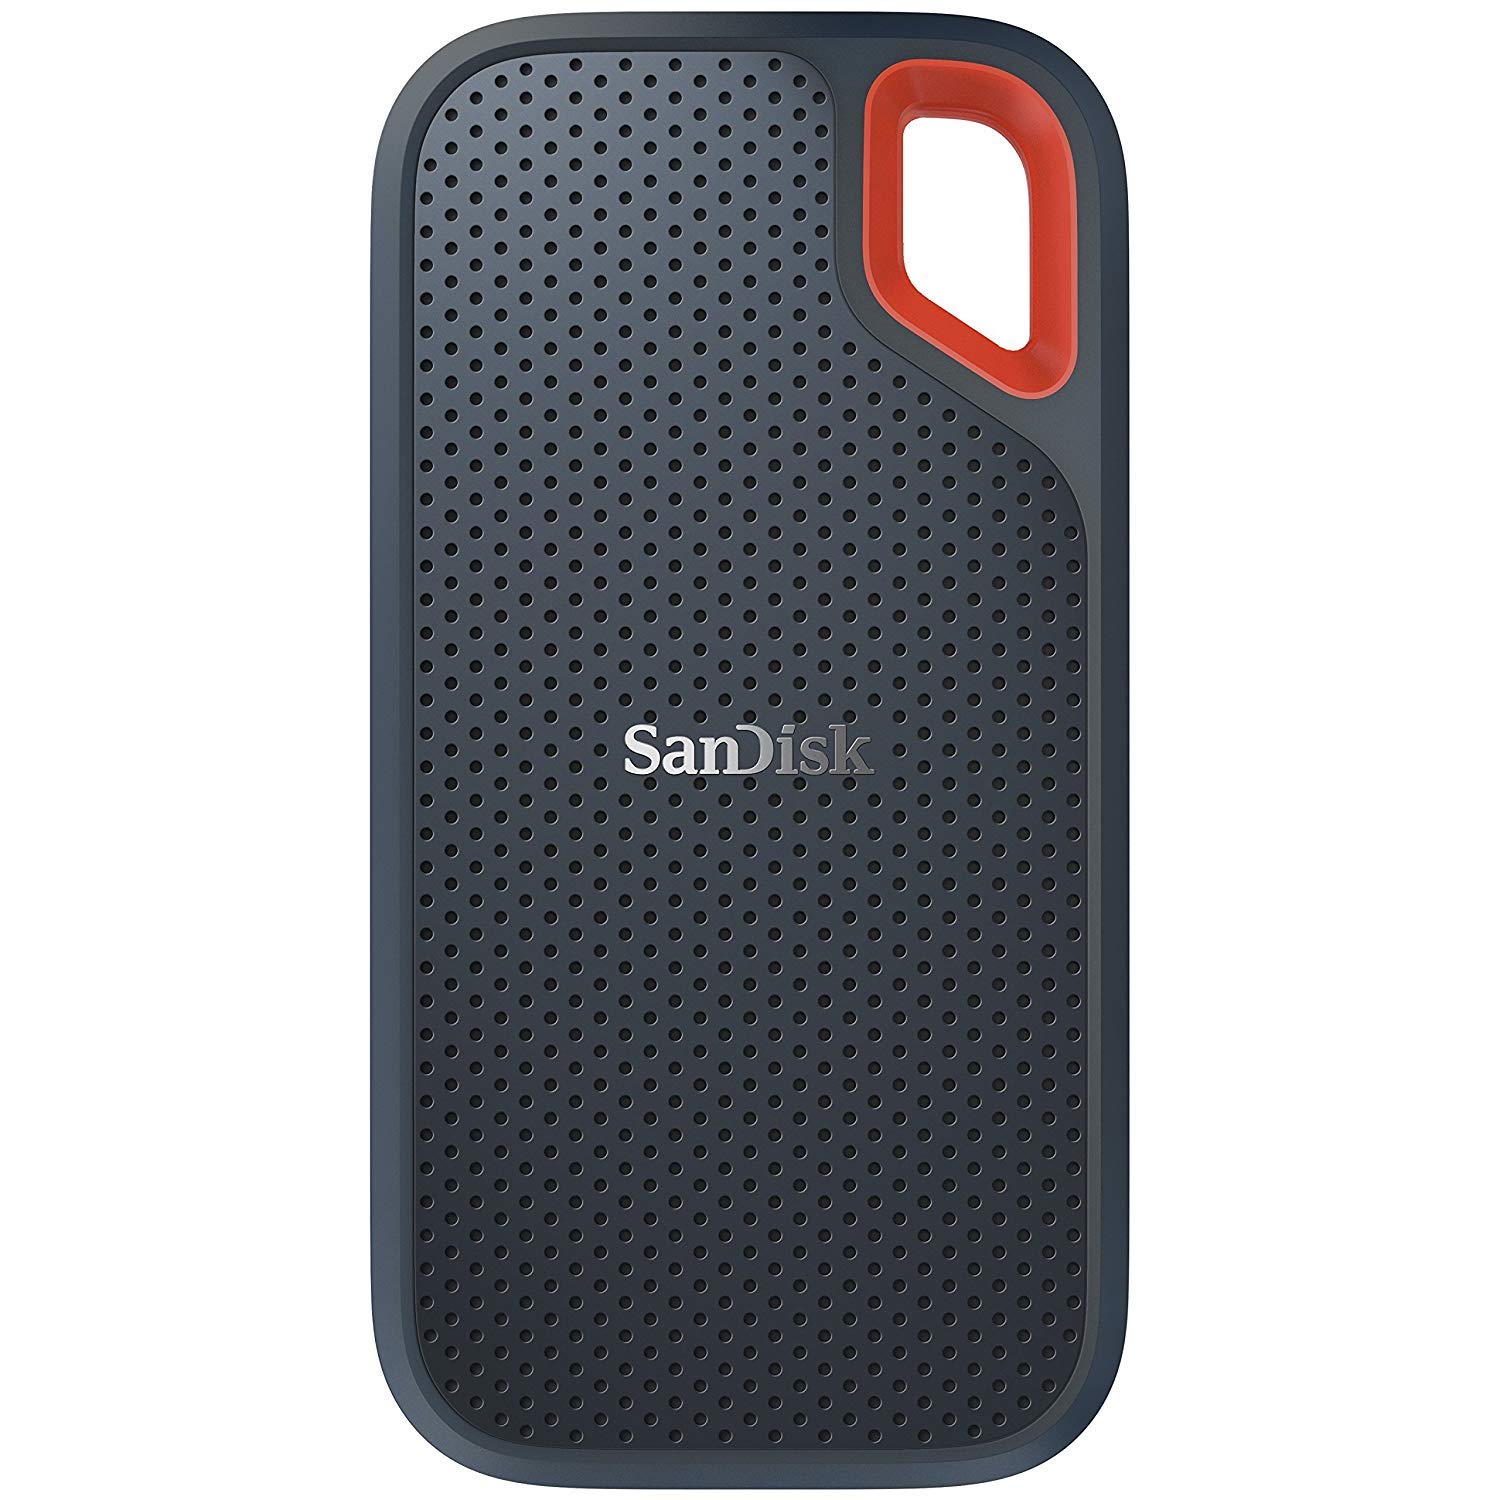 SanDisk SSD externe portable extrême de 250 Go